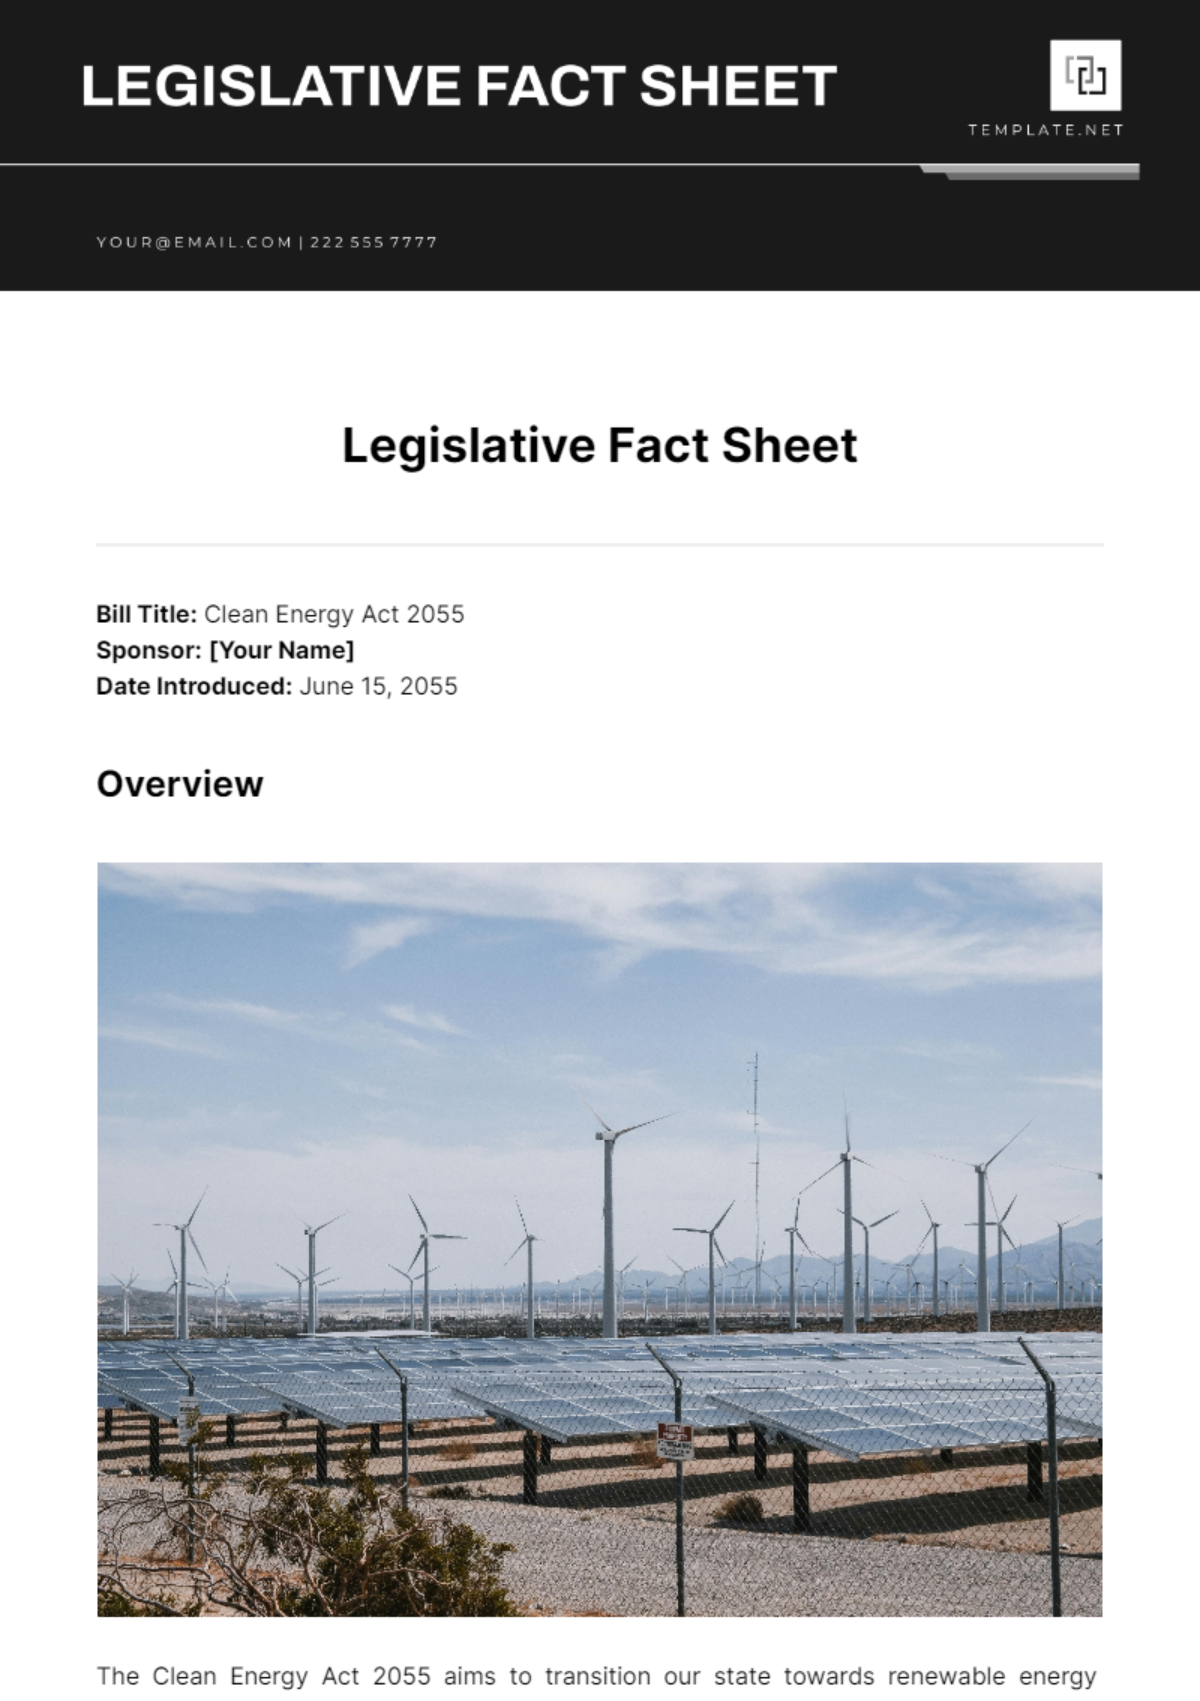 Legislative Fact Sheet Template